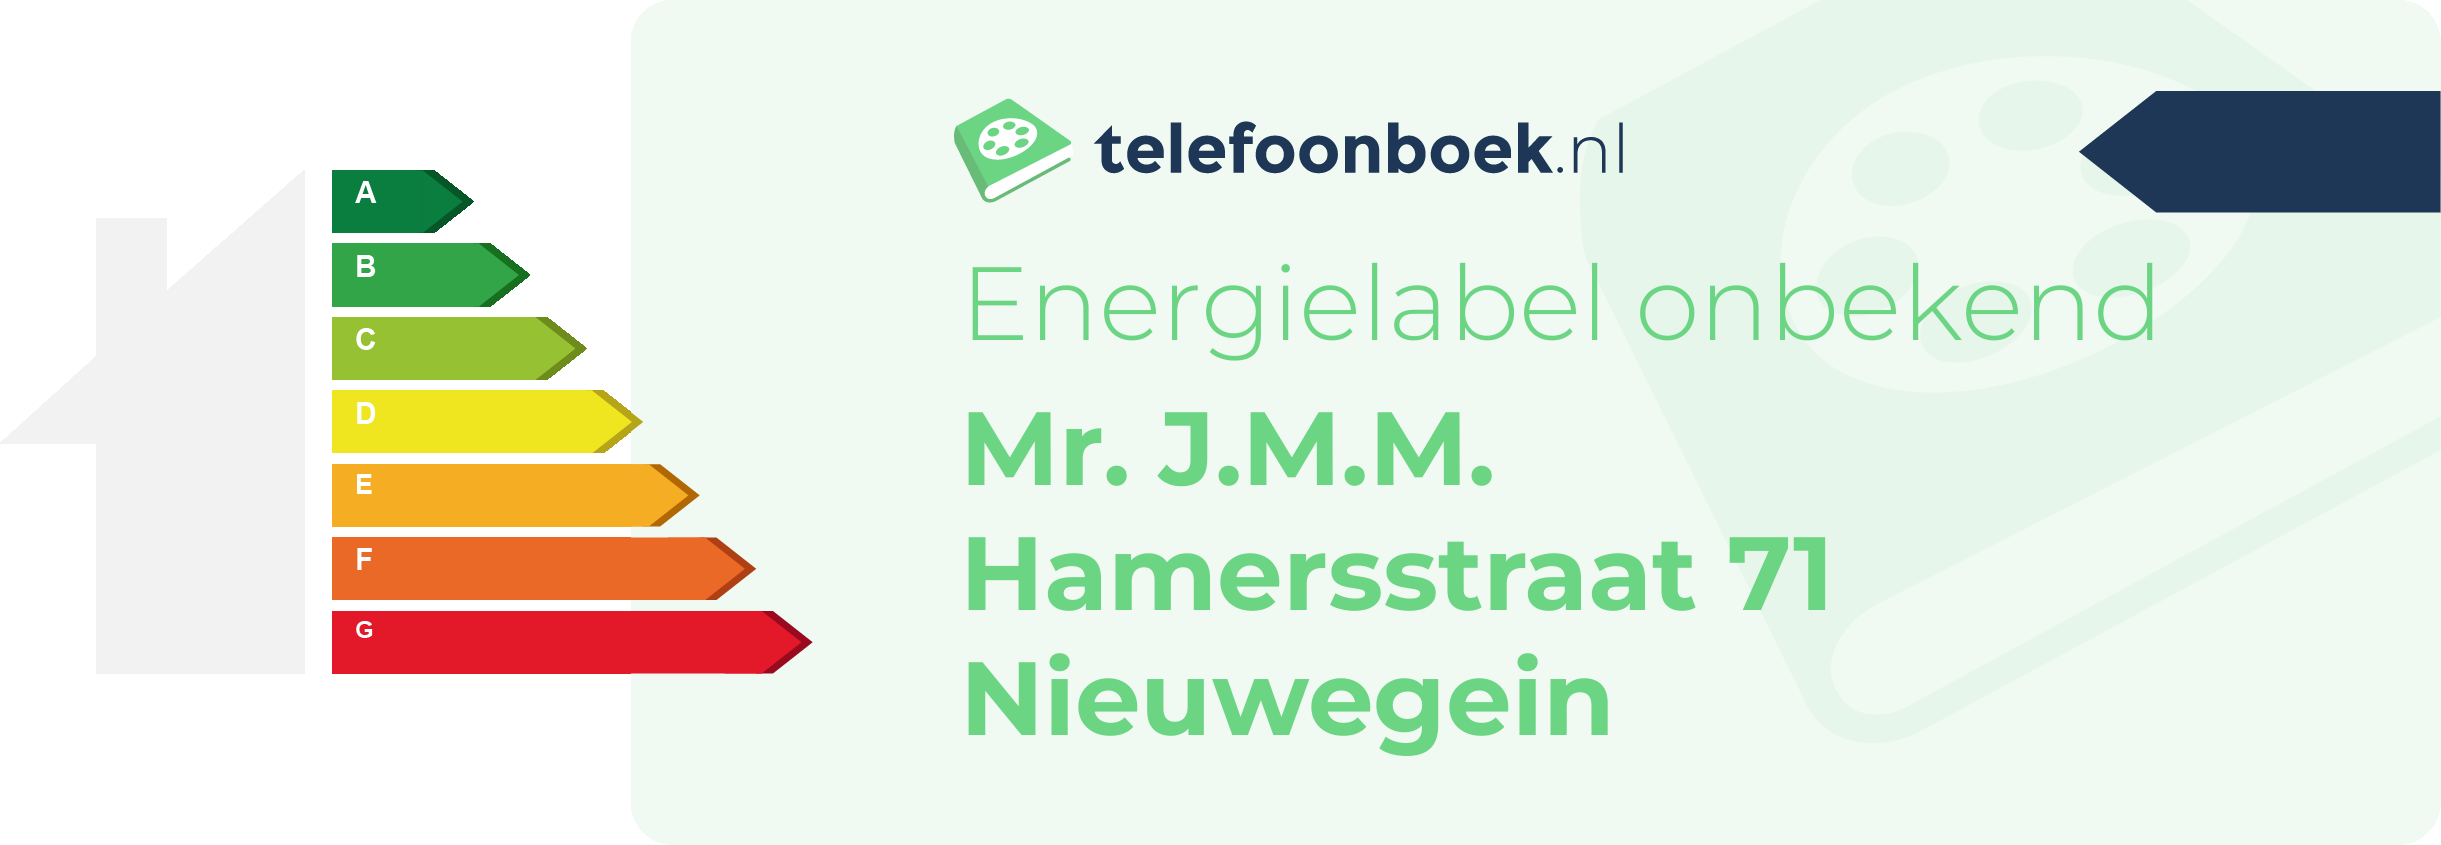 Energielabel Mr. J.M.M. Hamersstraat 71 Nieuwegein